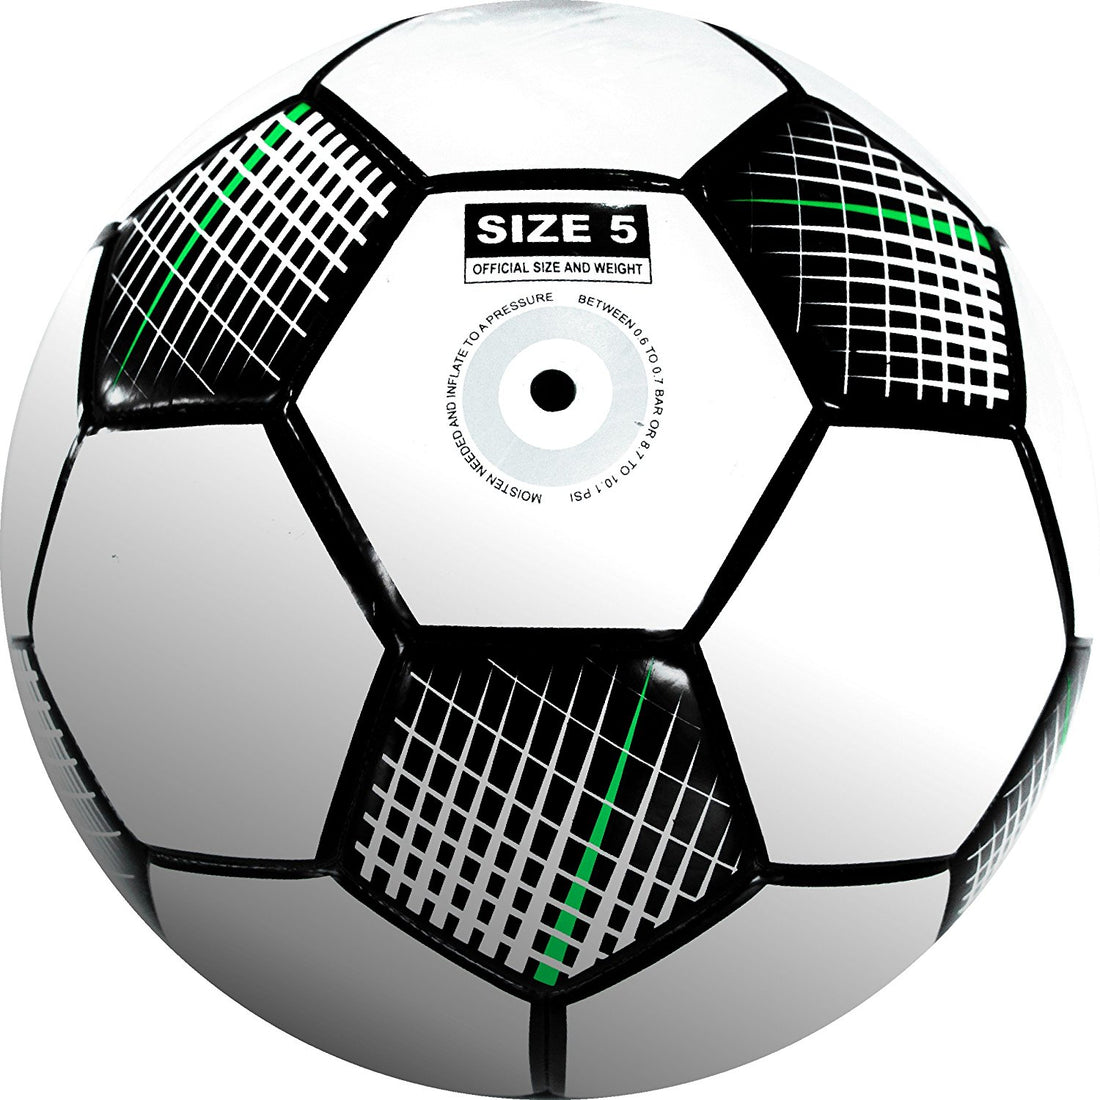 TASTRO Training Soccer Ball Size 5